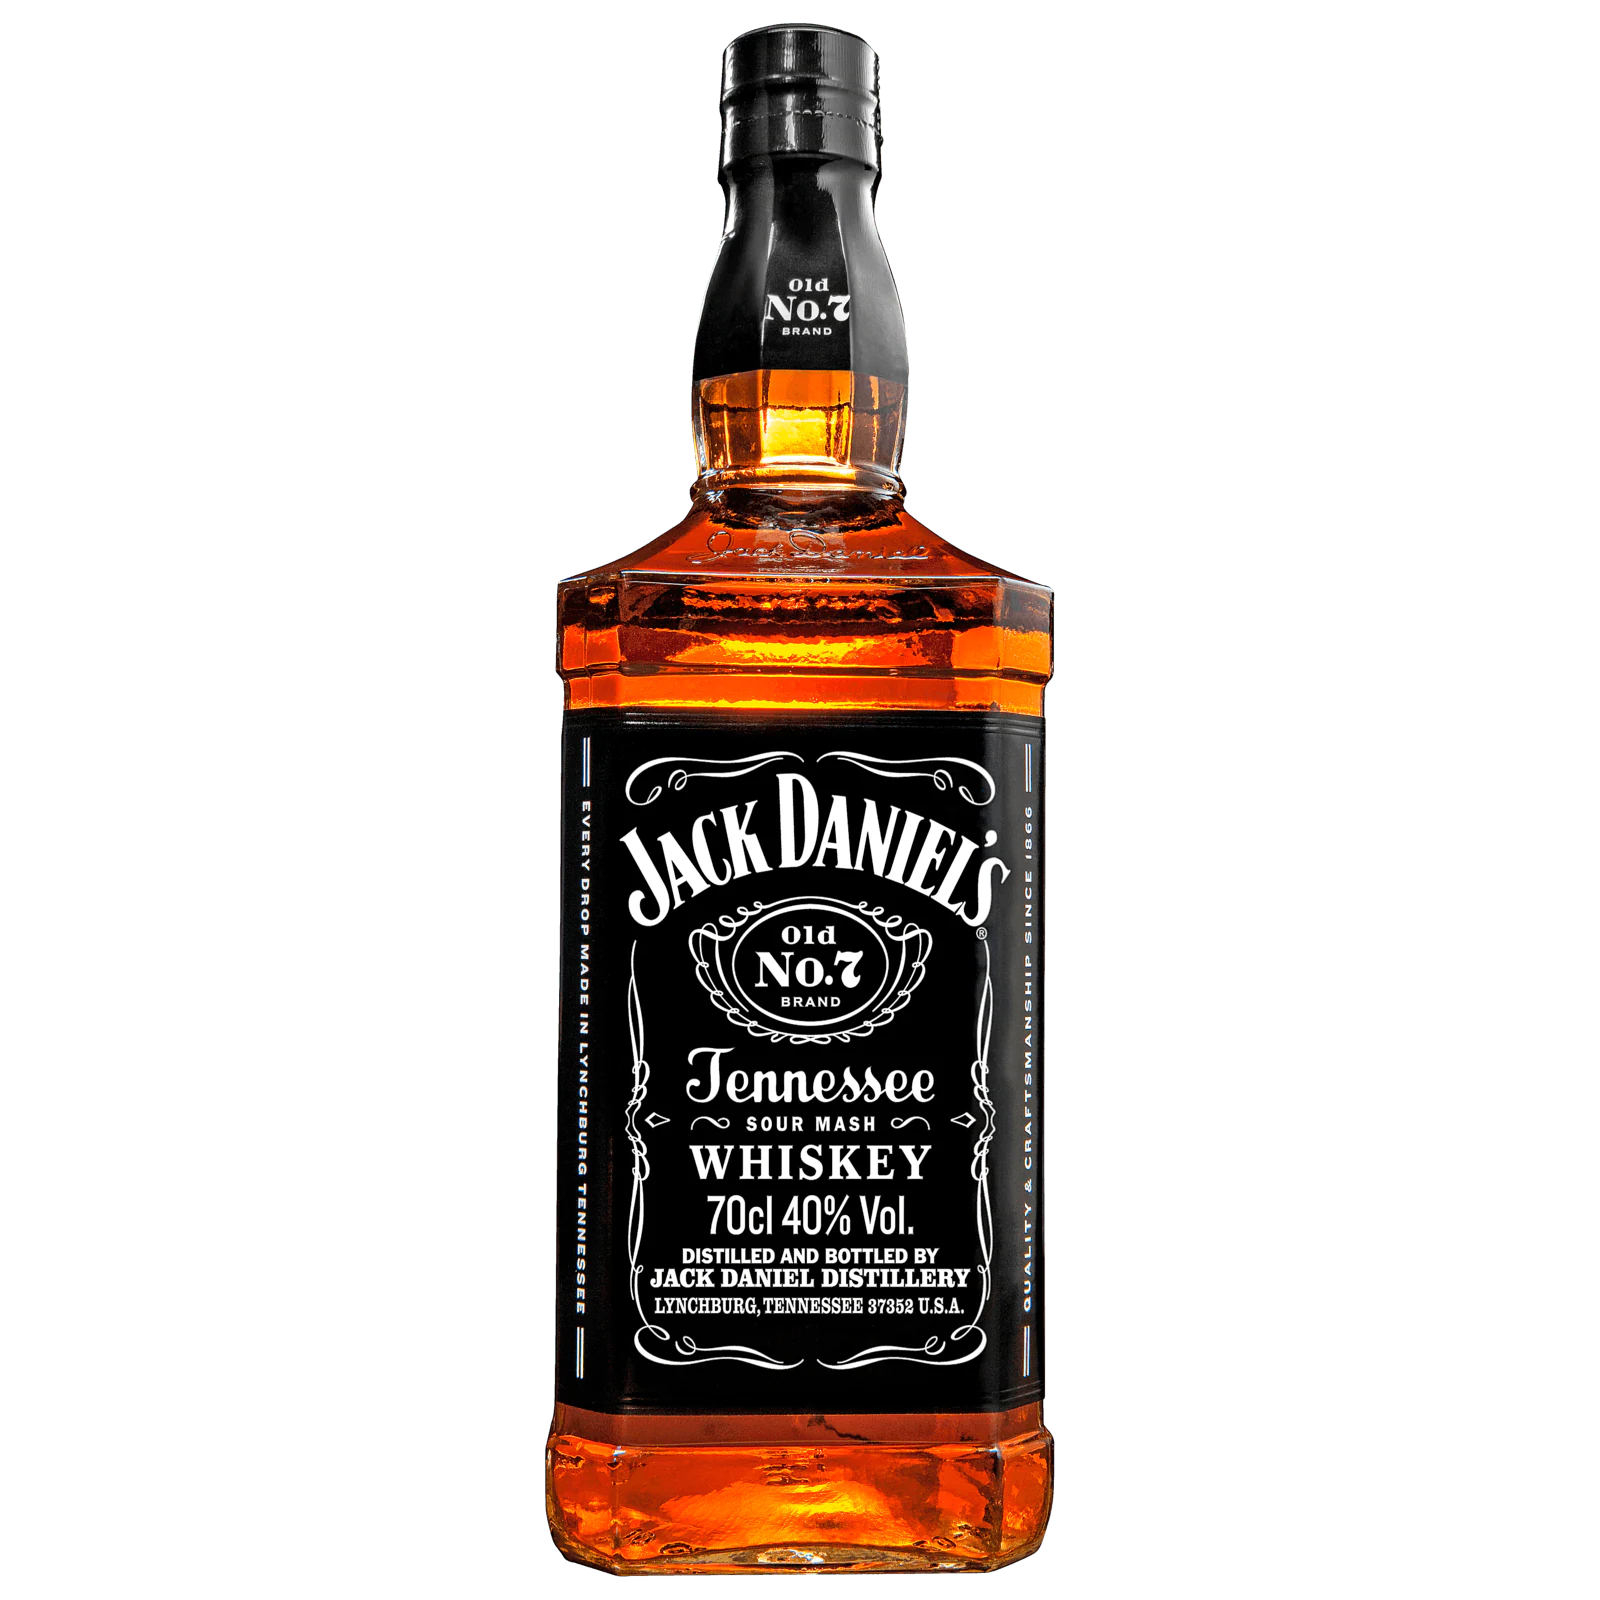 Jack Daniels Tennessee Whiskey 07l Bei Rewe Online Bestellen